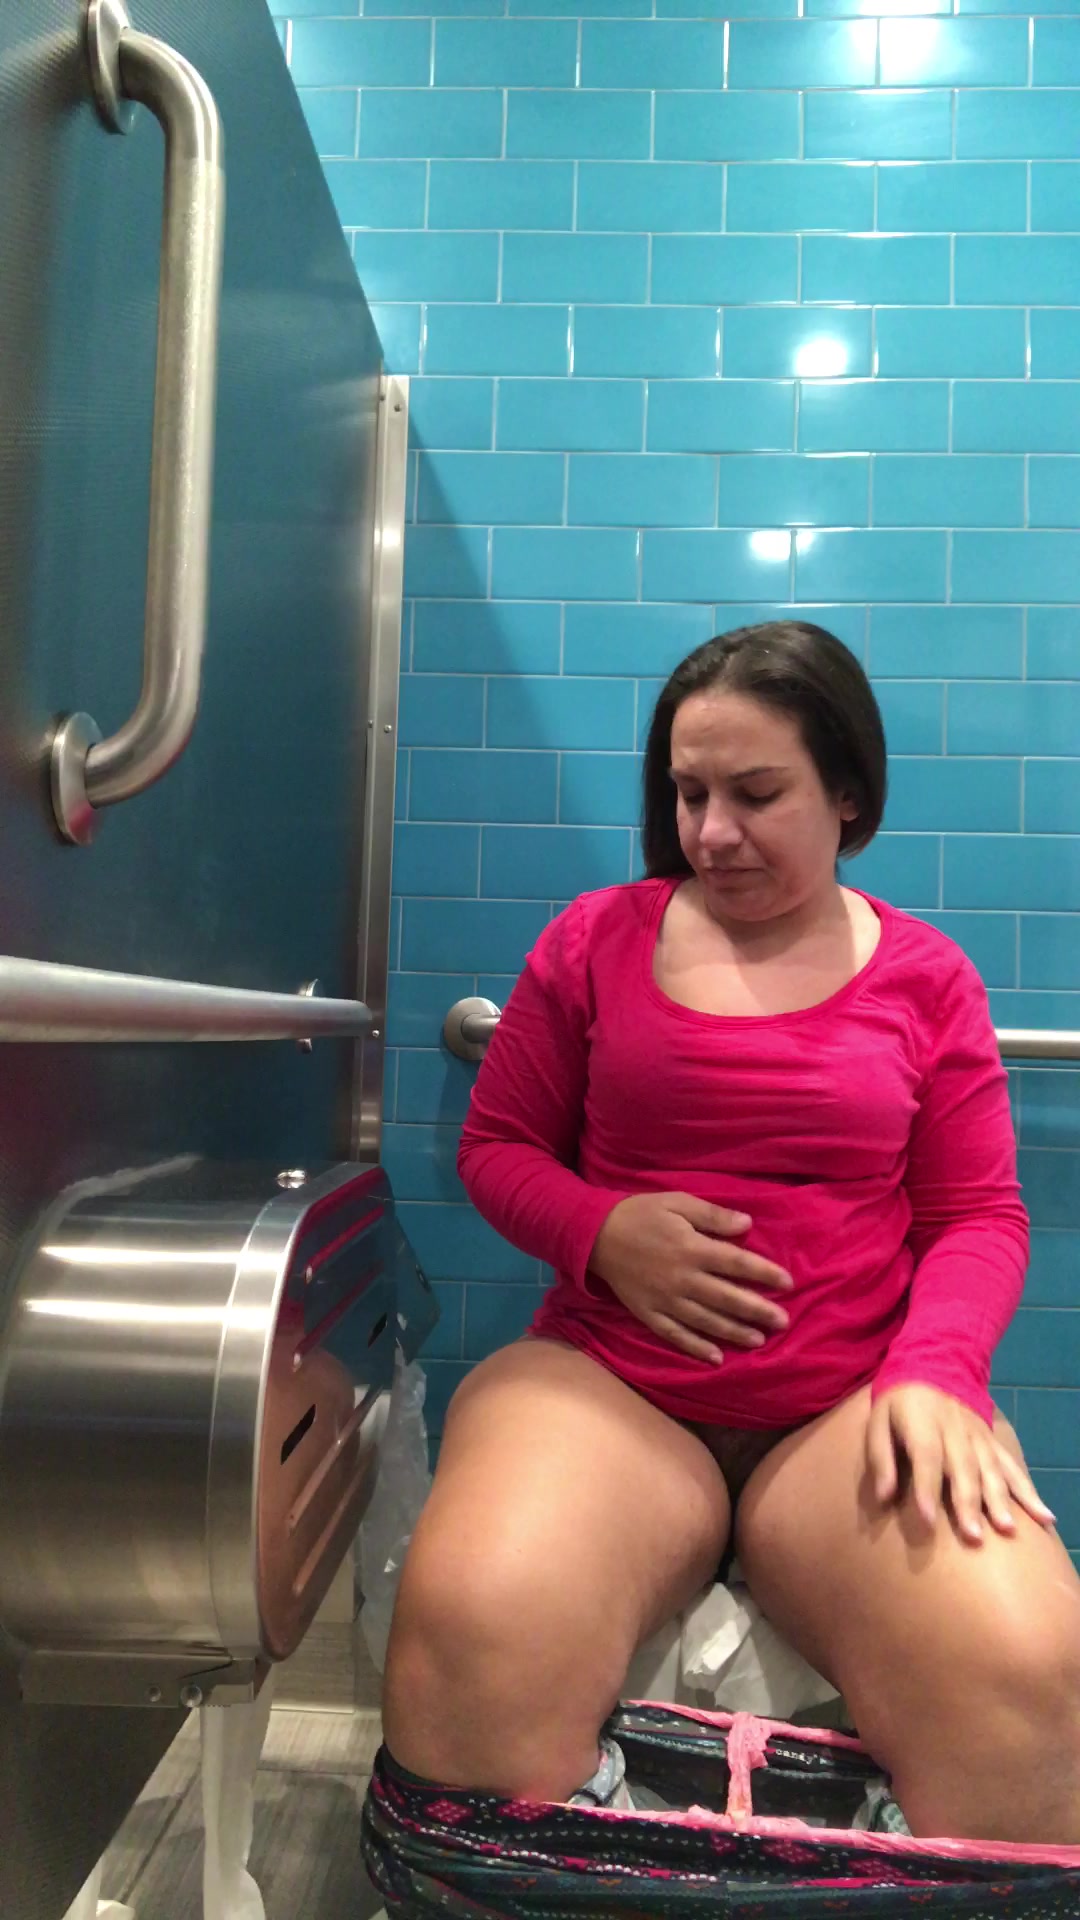 Pink shirt woman public toilet poop photo